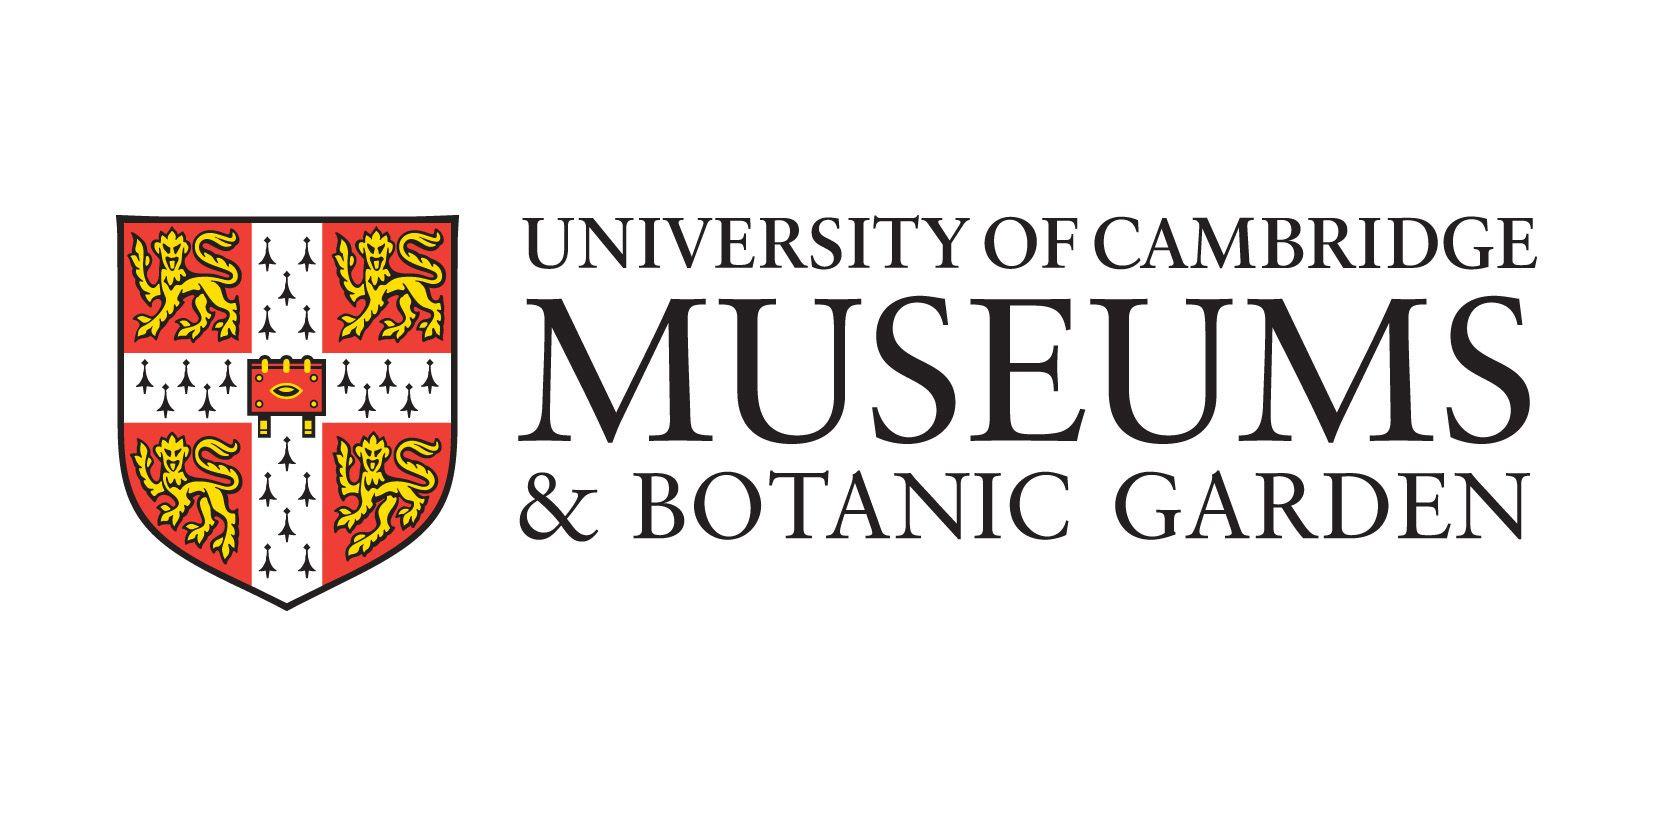 University of Cambridge Logo - UCM logo. University of Cambridge